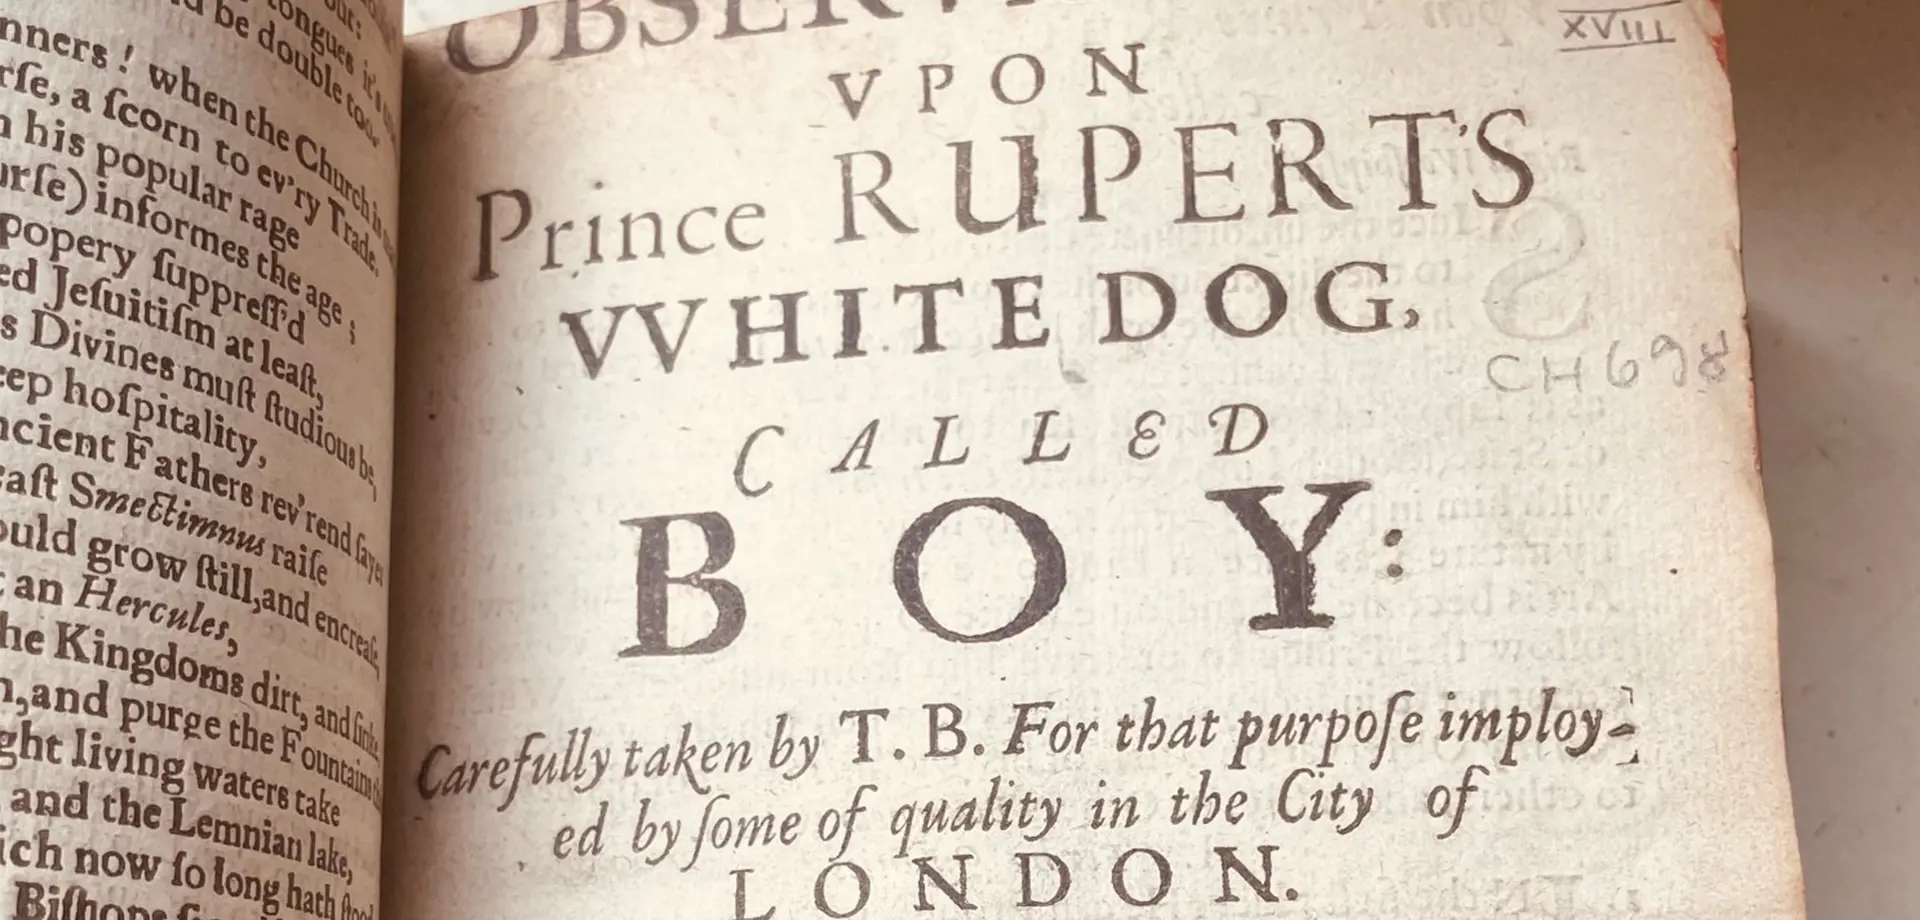 Prince Rupert’s White Dog Called Boy